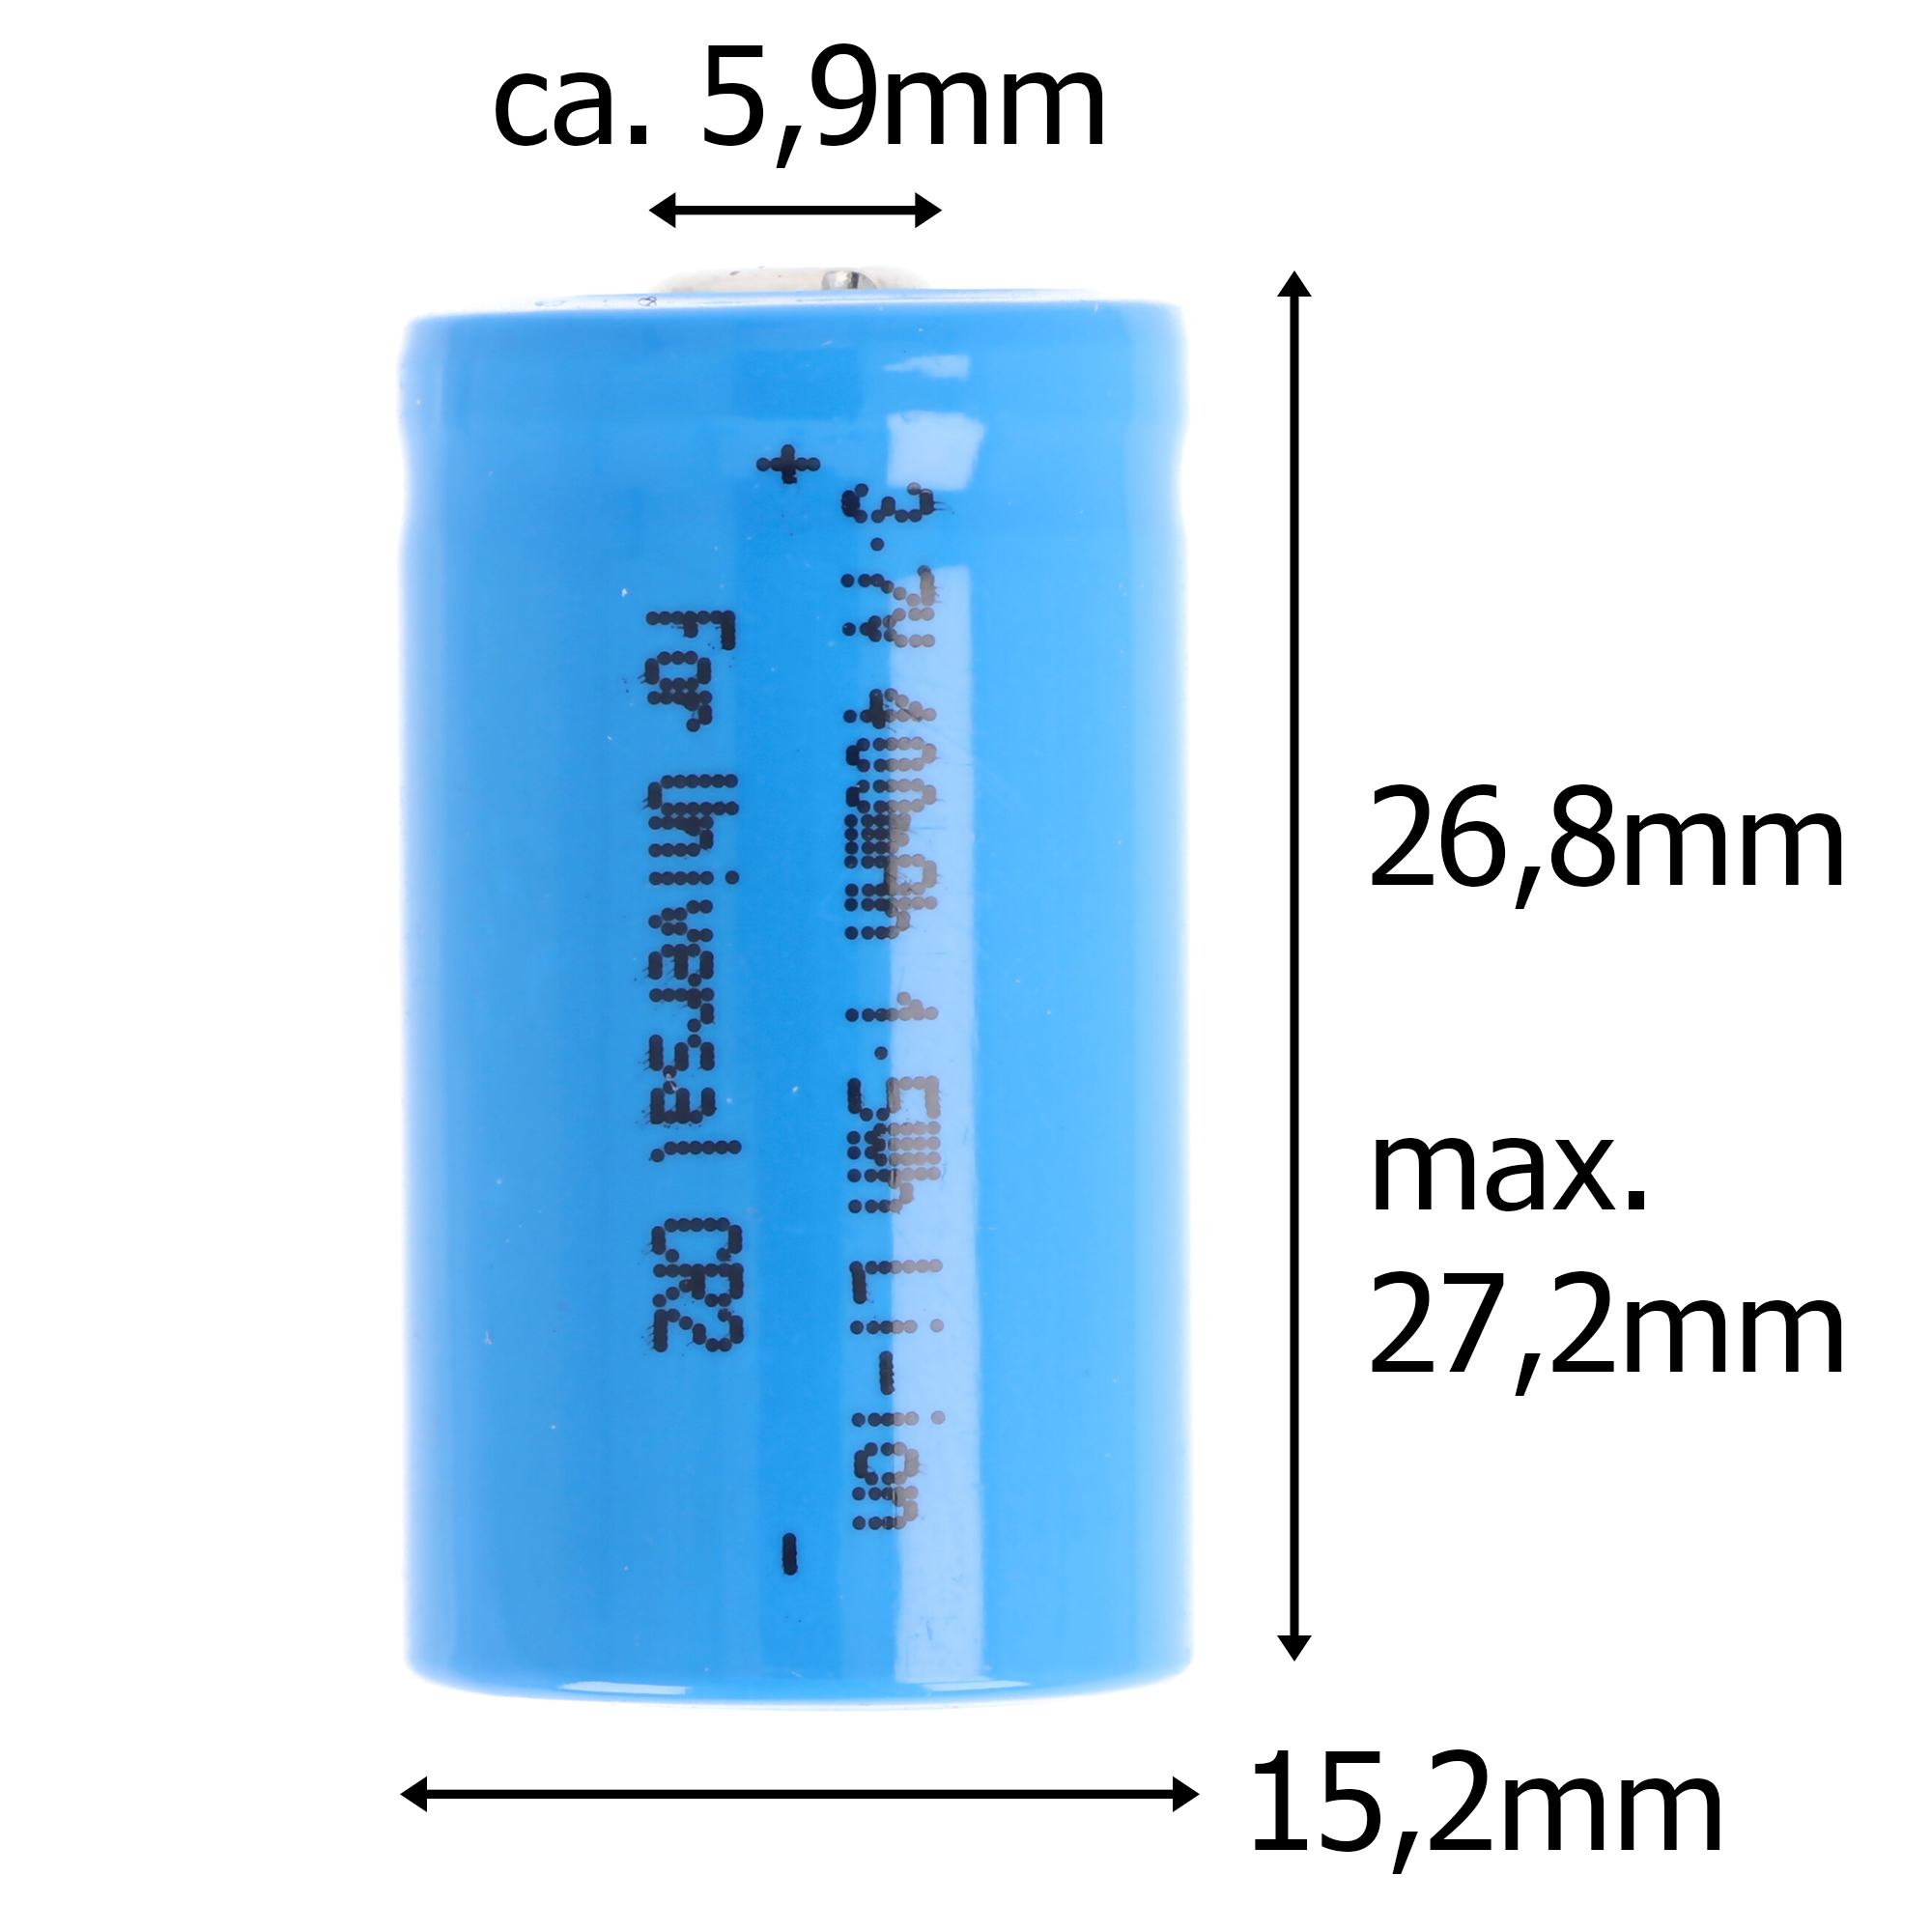 3.7 Volt Akku Li-ion CR2 Akku mit 3,7 Volt, Ladeschlussspannung 4,2V max. 400mAh CR15H270 Spannung beachten